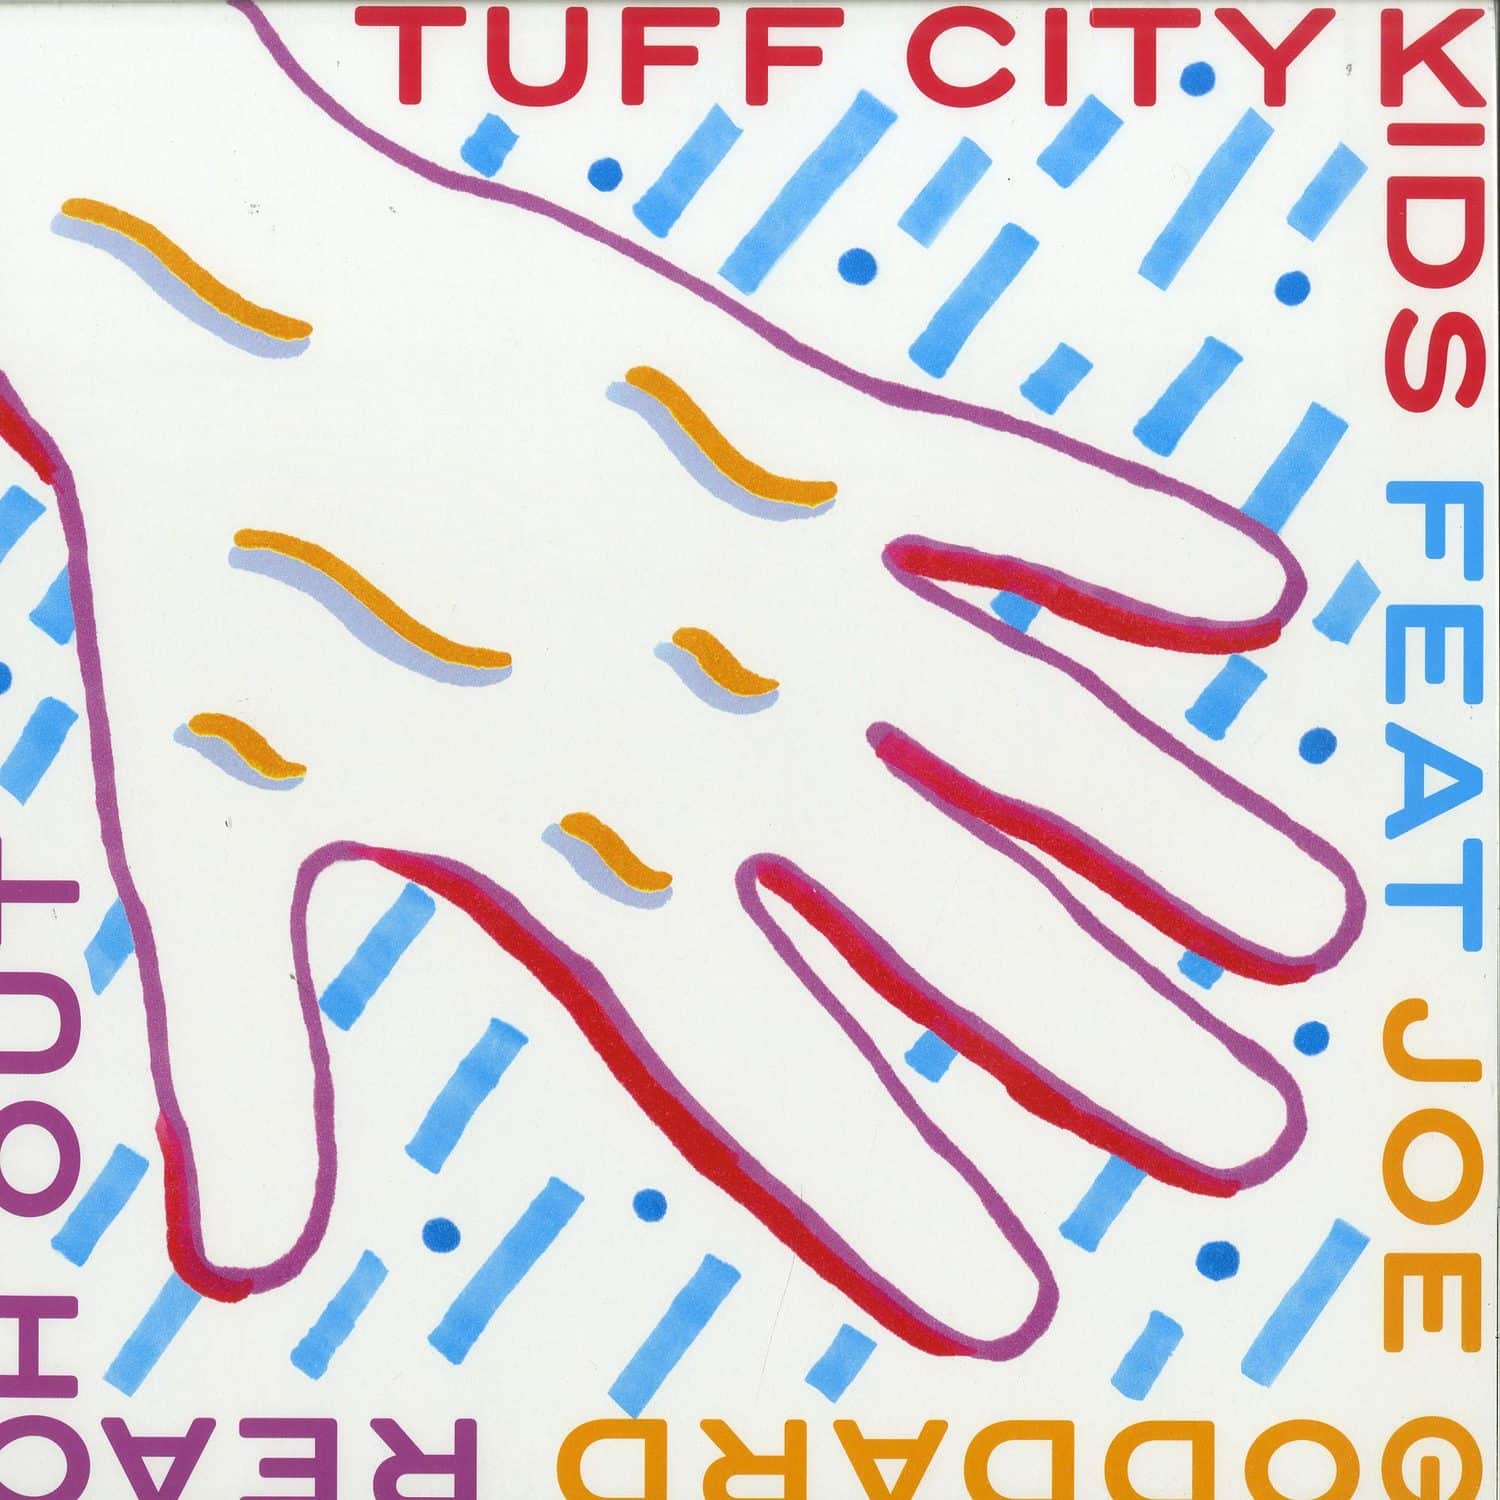 Tuff City Kids feat. Joe Goddard - REACH OUT 